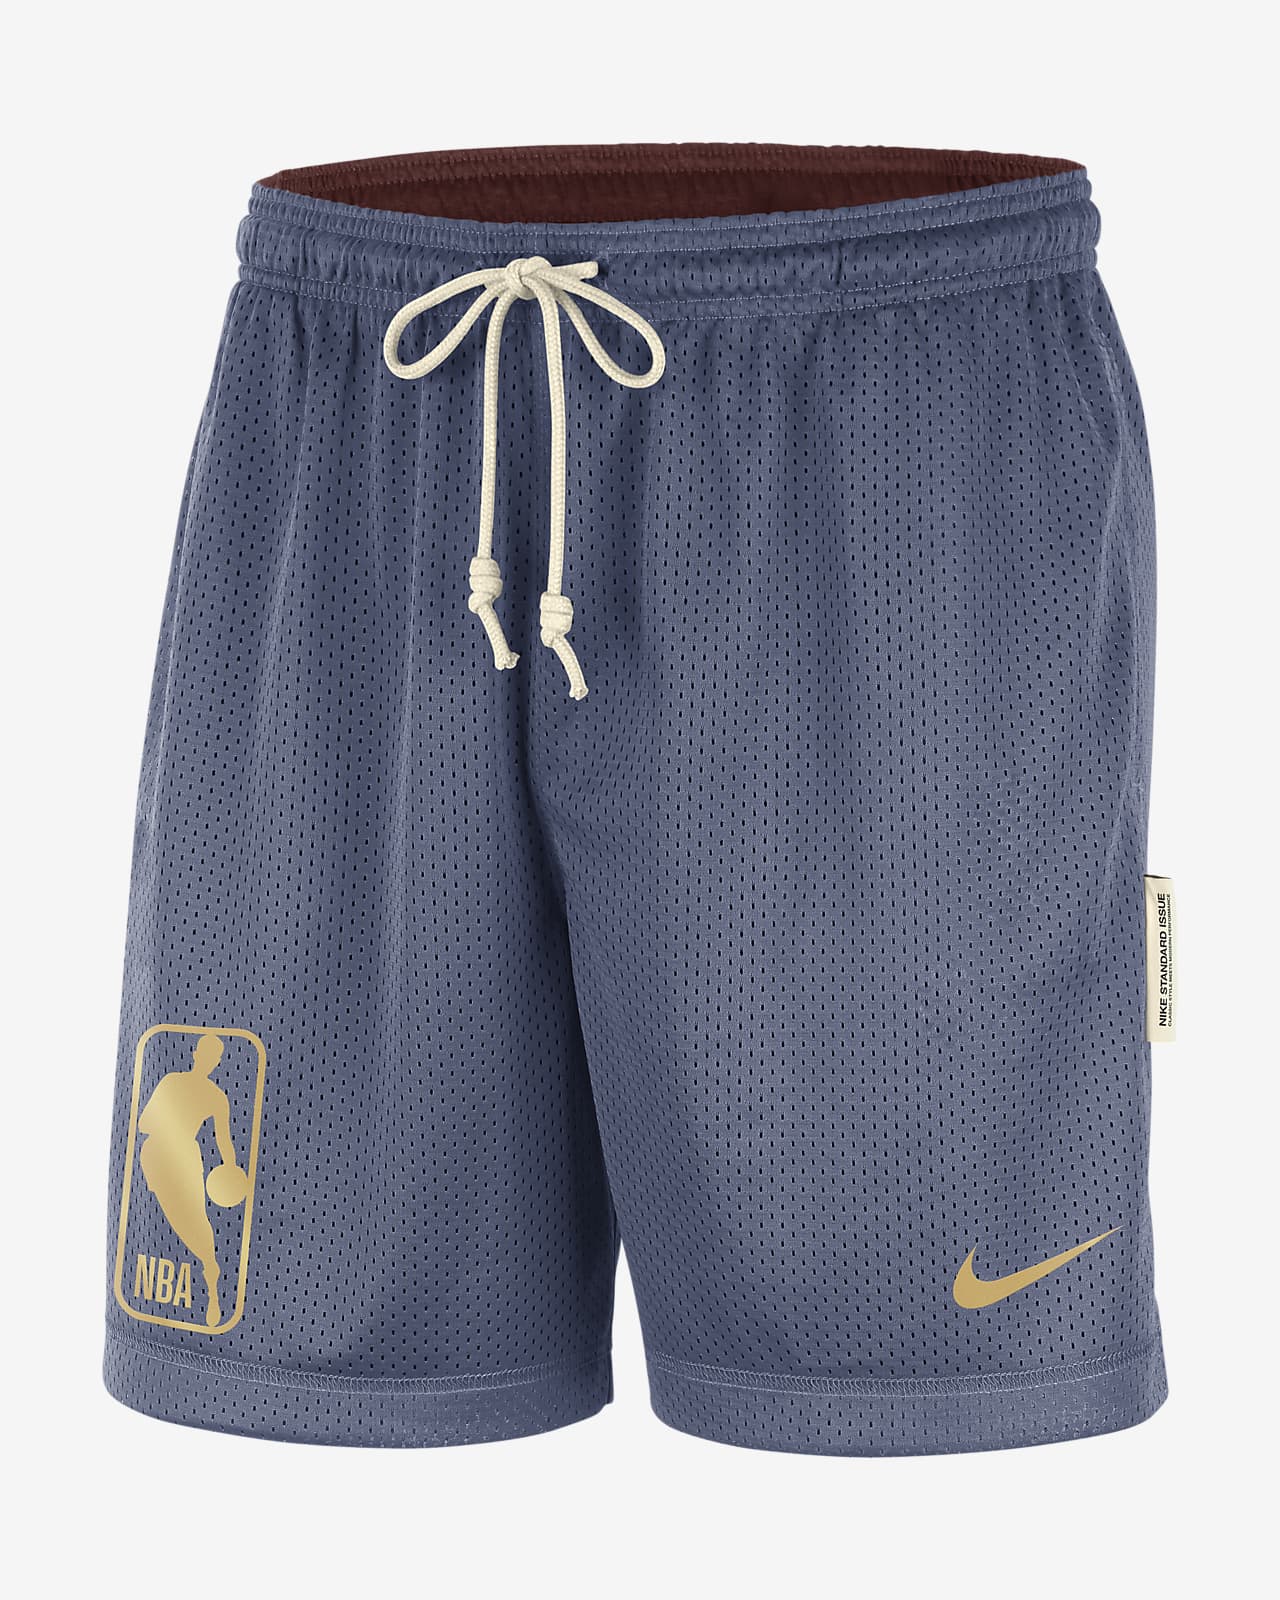 Shorts reversibili Team 31 Standard Issue Nike Dri-FIT NBA – Uomo